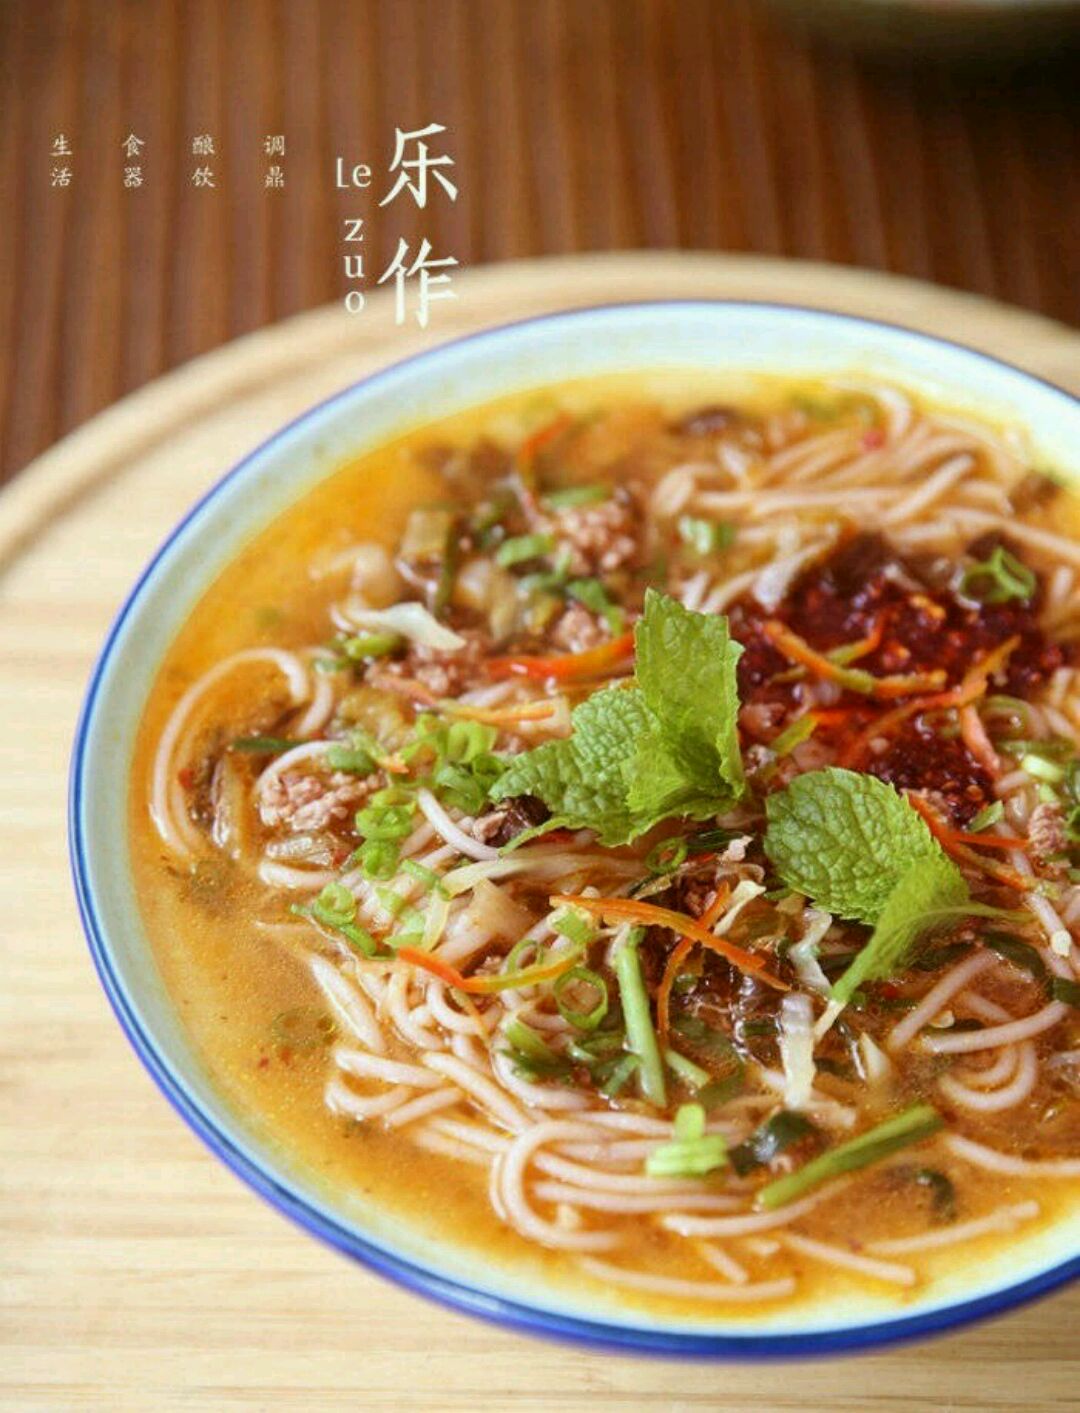 小锅煮米线，云南昆明人最喜欢的米线做法_哔哩哔哩 (゜-゜)つロ 干杯~-bilibili